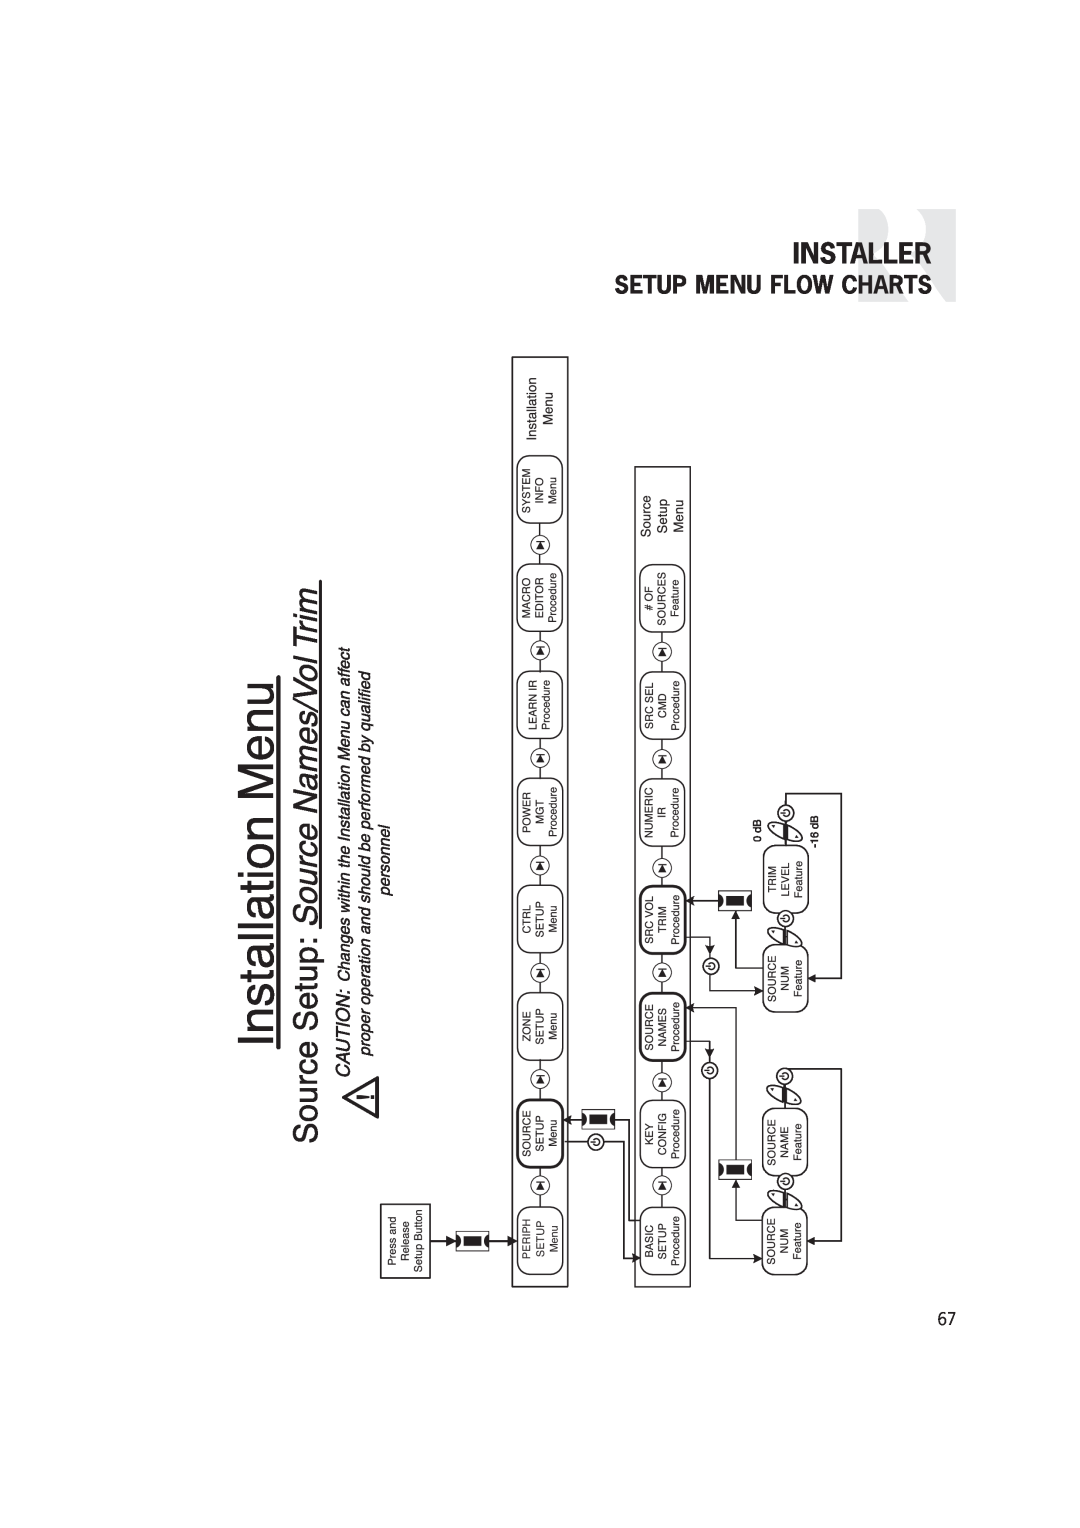 Russound CAM6.6T-S1 instruction manual Installer, Setup Menu Flow Charts, Periph 